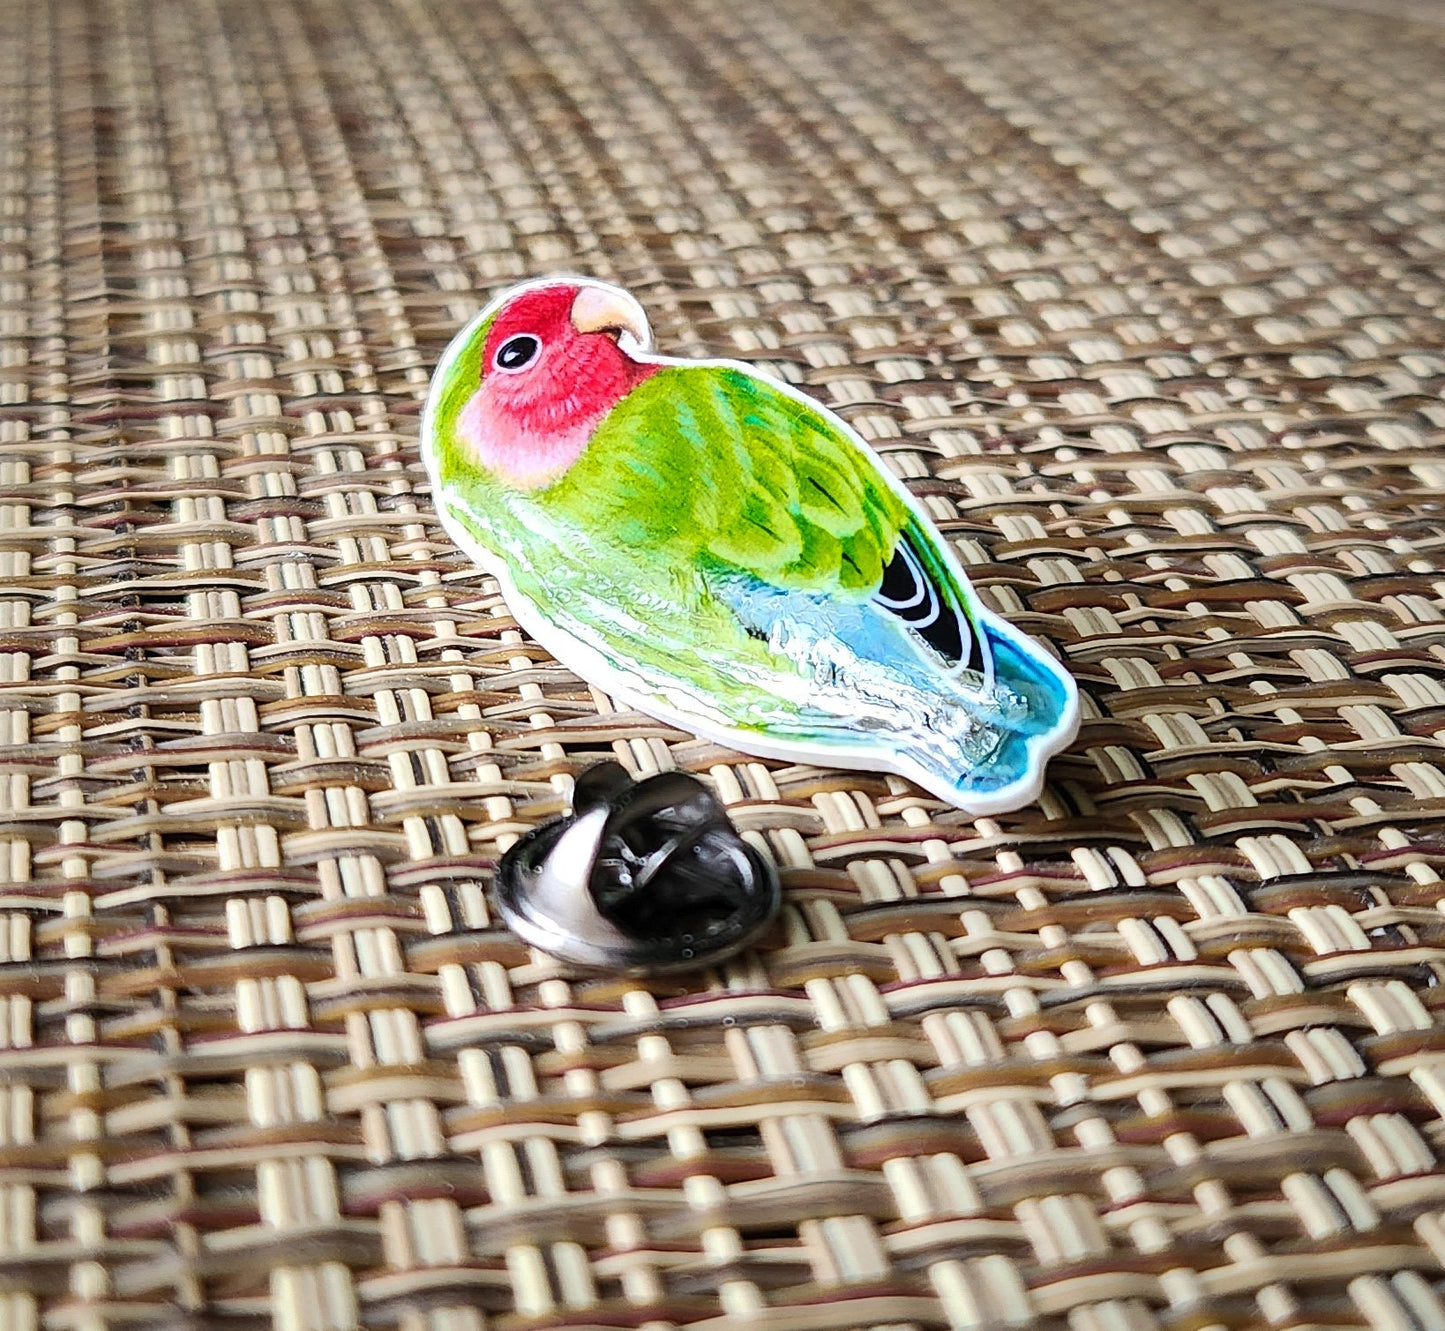 Rosy Faced Lovebird - Resin Coated Polystyrene Pin - 100% Handmade Parrot Pin